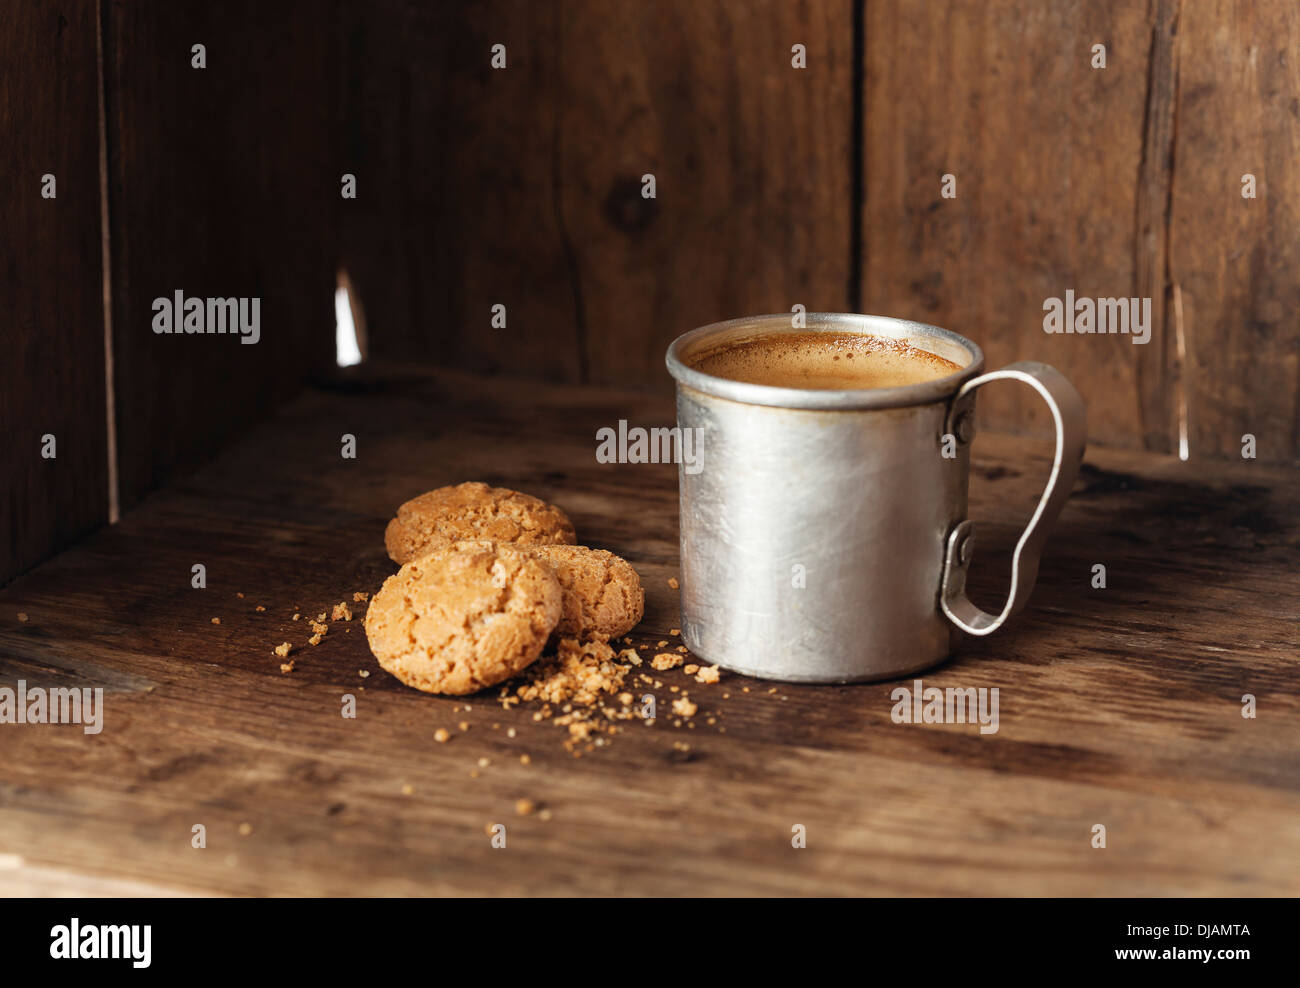 Coffee in aluminum mug with amaretti biscuits Stock Photo